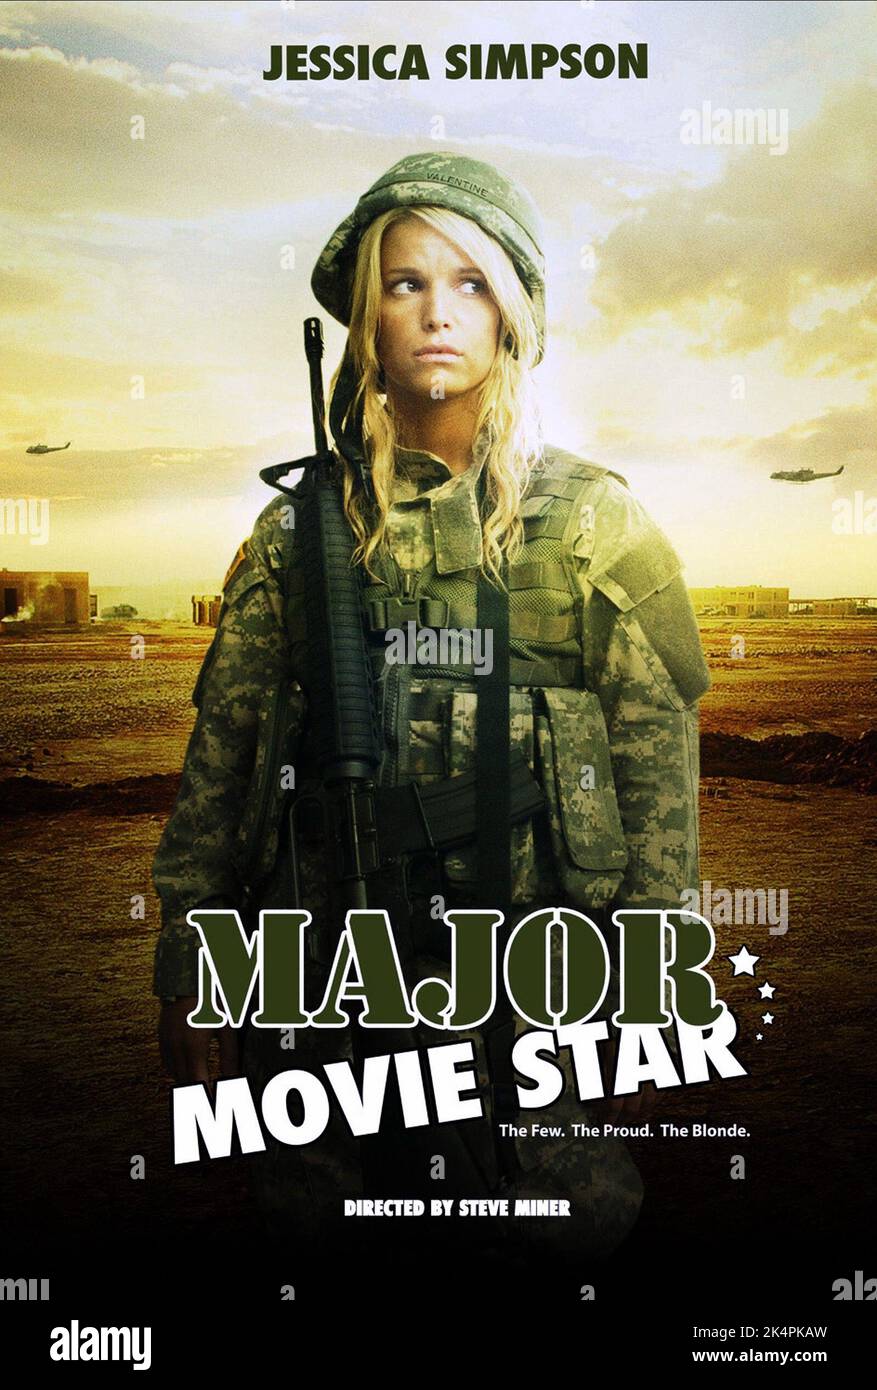 Jessica Simpson is a Major Movie Star: Photo 145341